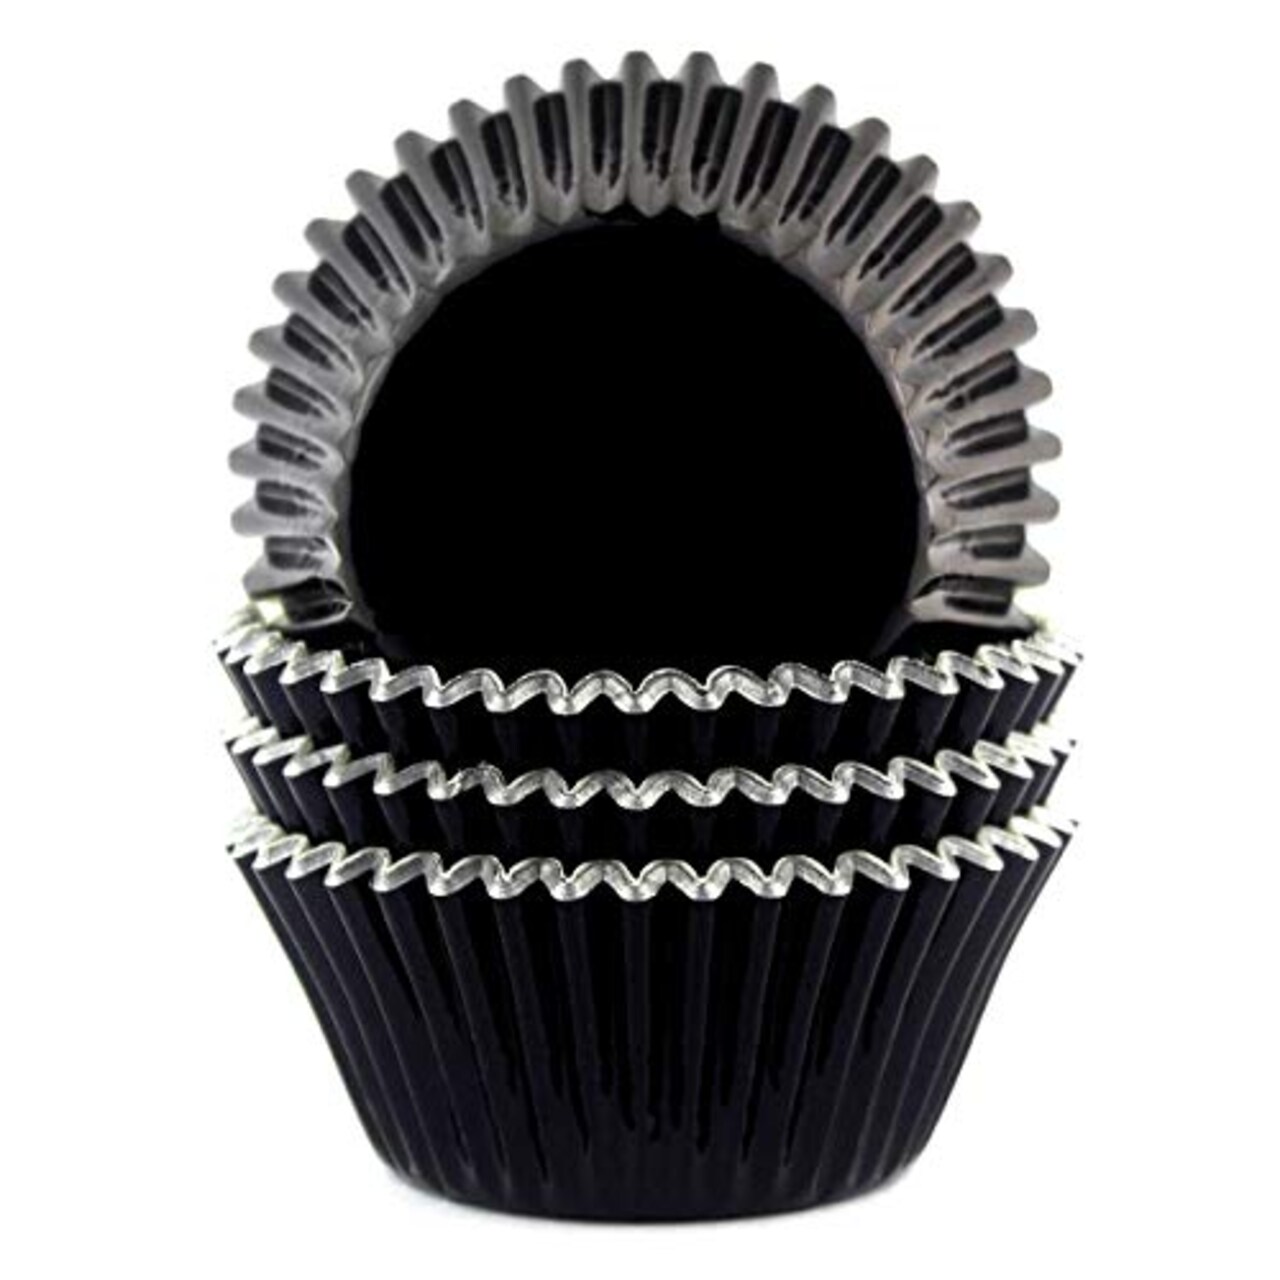 Eoonfirst Foil Metallic Cupcake Liners Halloween Party Standard Baking Cups 100 Pcs (Black)